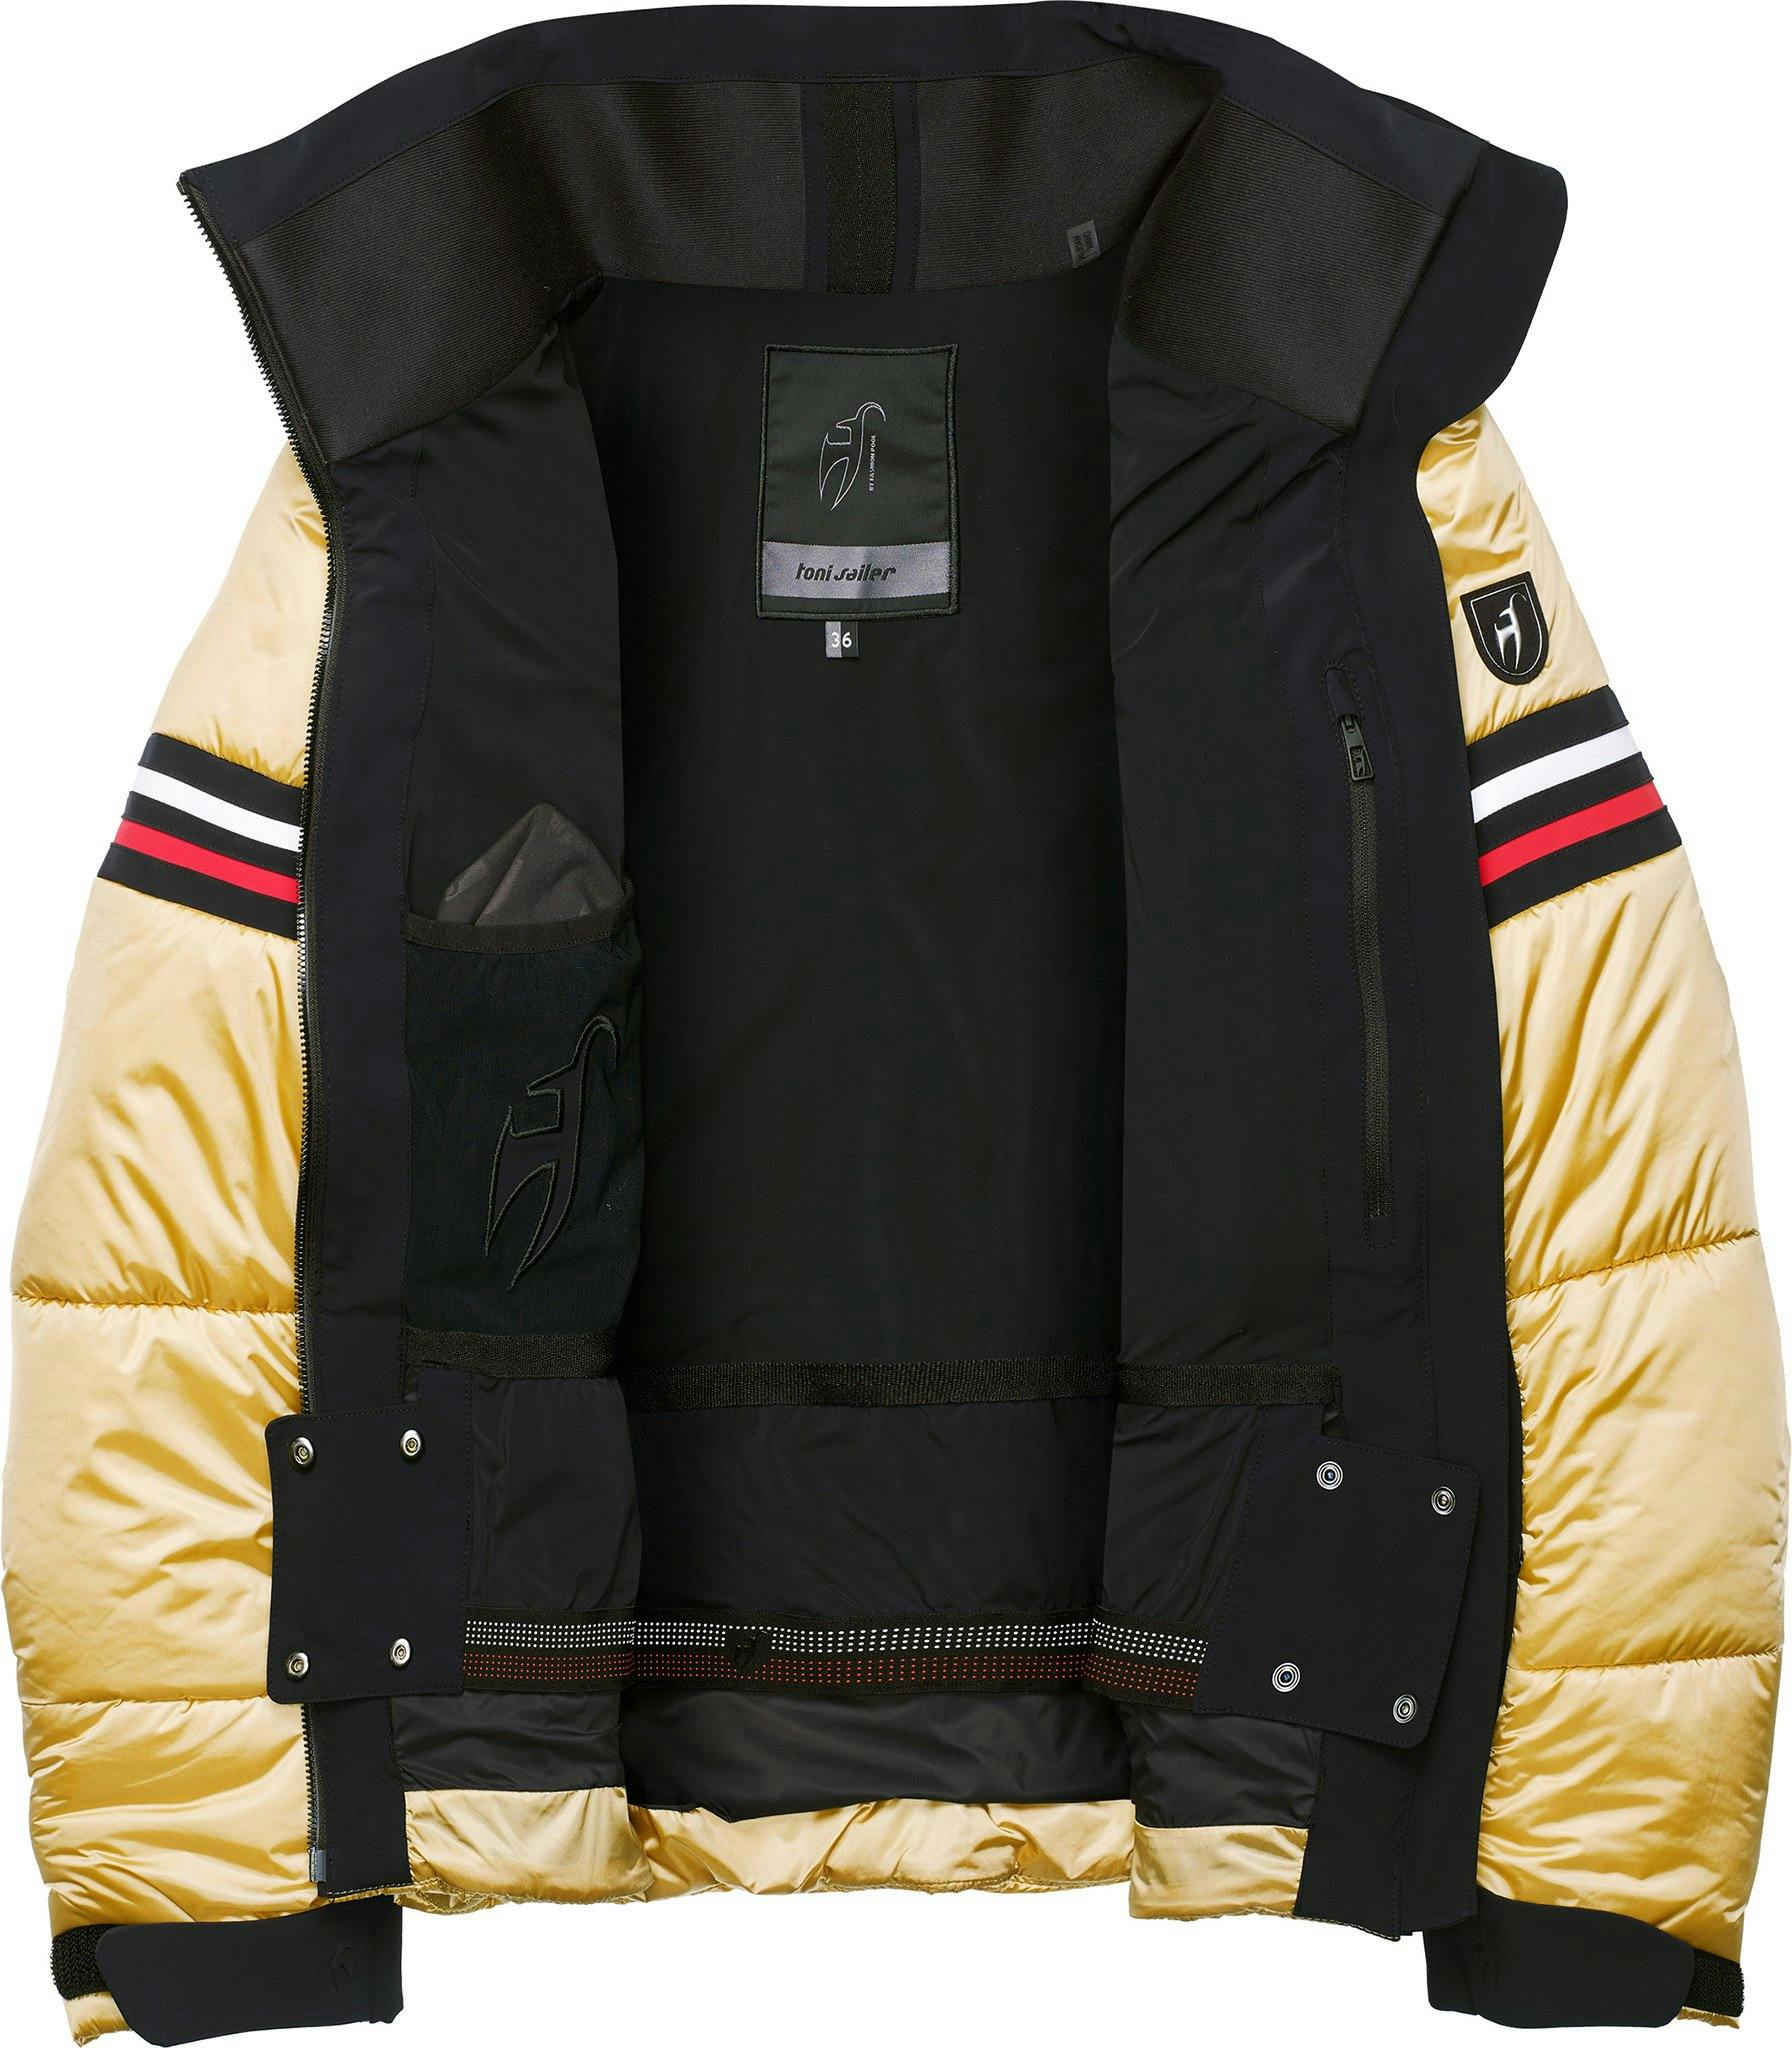 Product gallery image number 5 for product Nana Splendid Ski Jacket - Women's